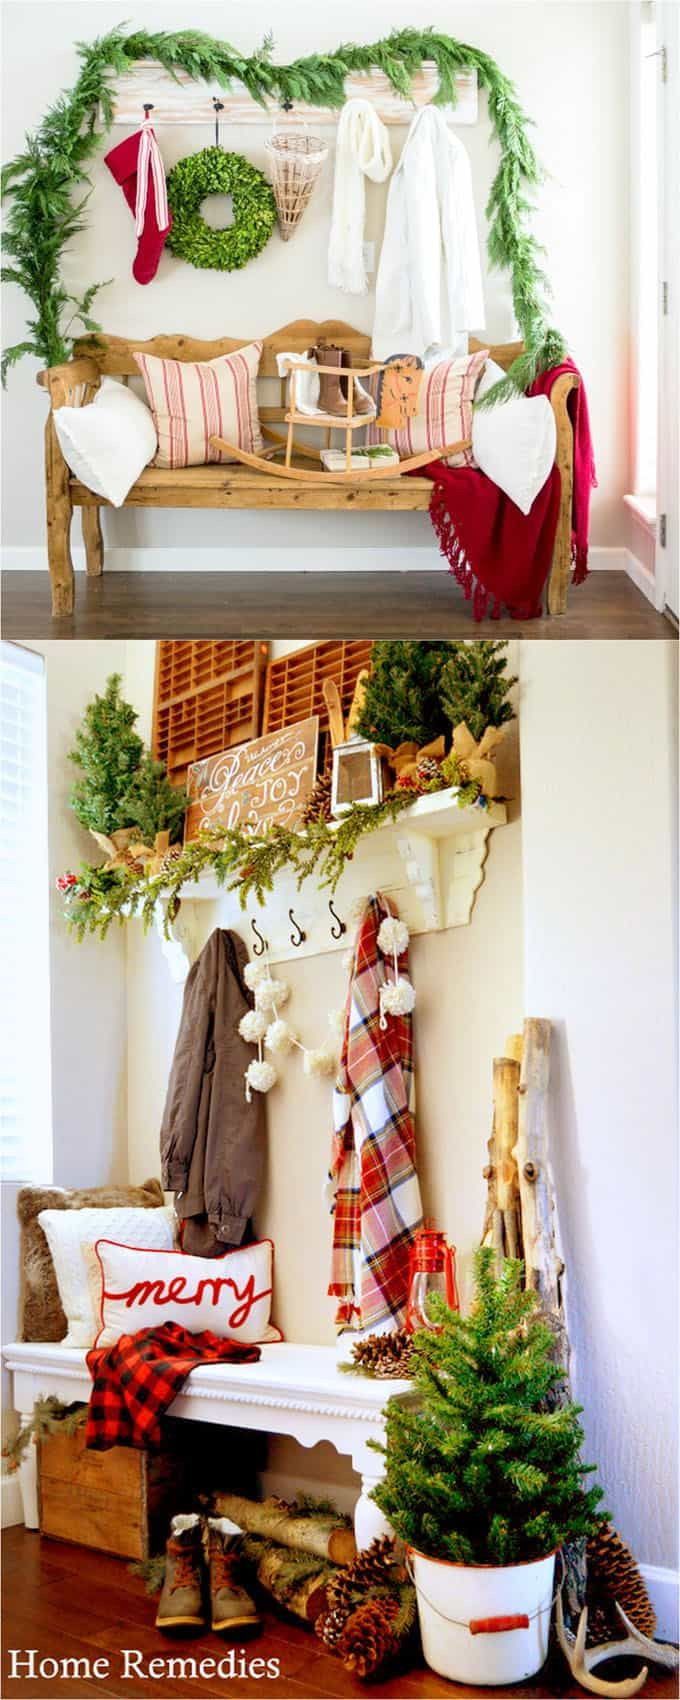 Christmas Entryway Decorating Ideas
 Best 25 Christmas entryway ideas on Pinterest